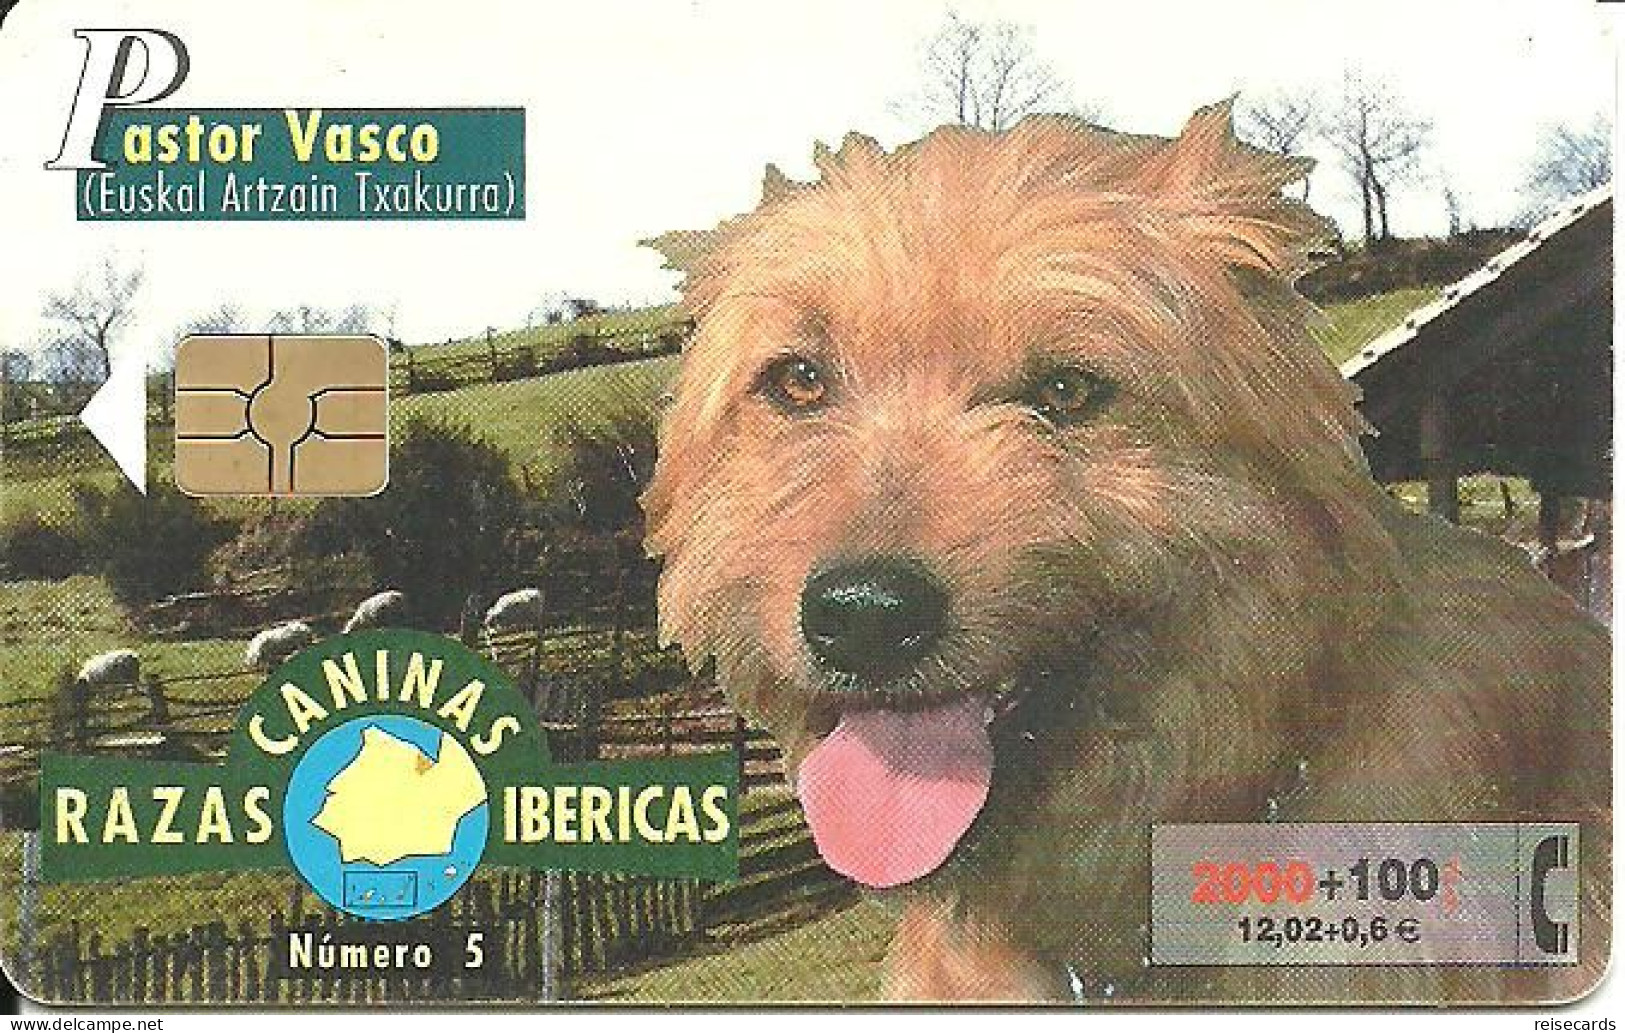 Spain: Telefonica - 2000 Real Sociedad Canina Espanõla, Pastor Vasco - Private Issues